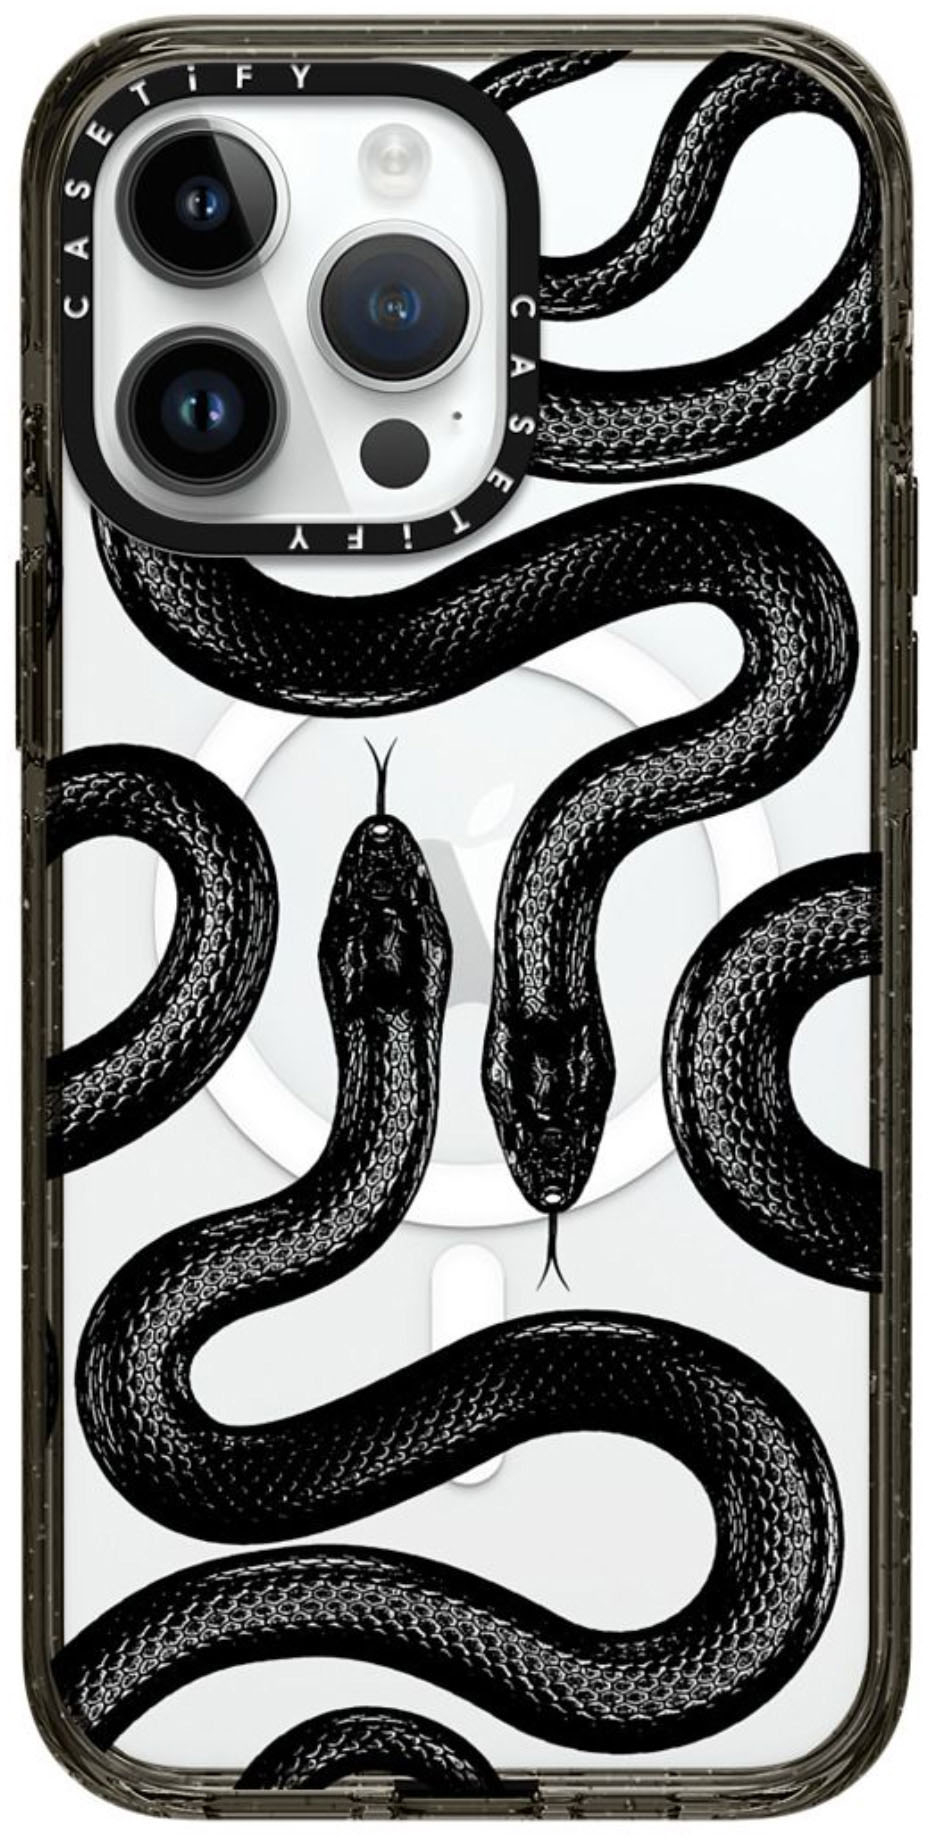 Pink Snake iPhone 11 Strap Case